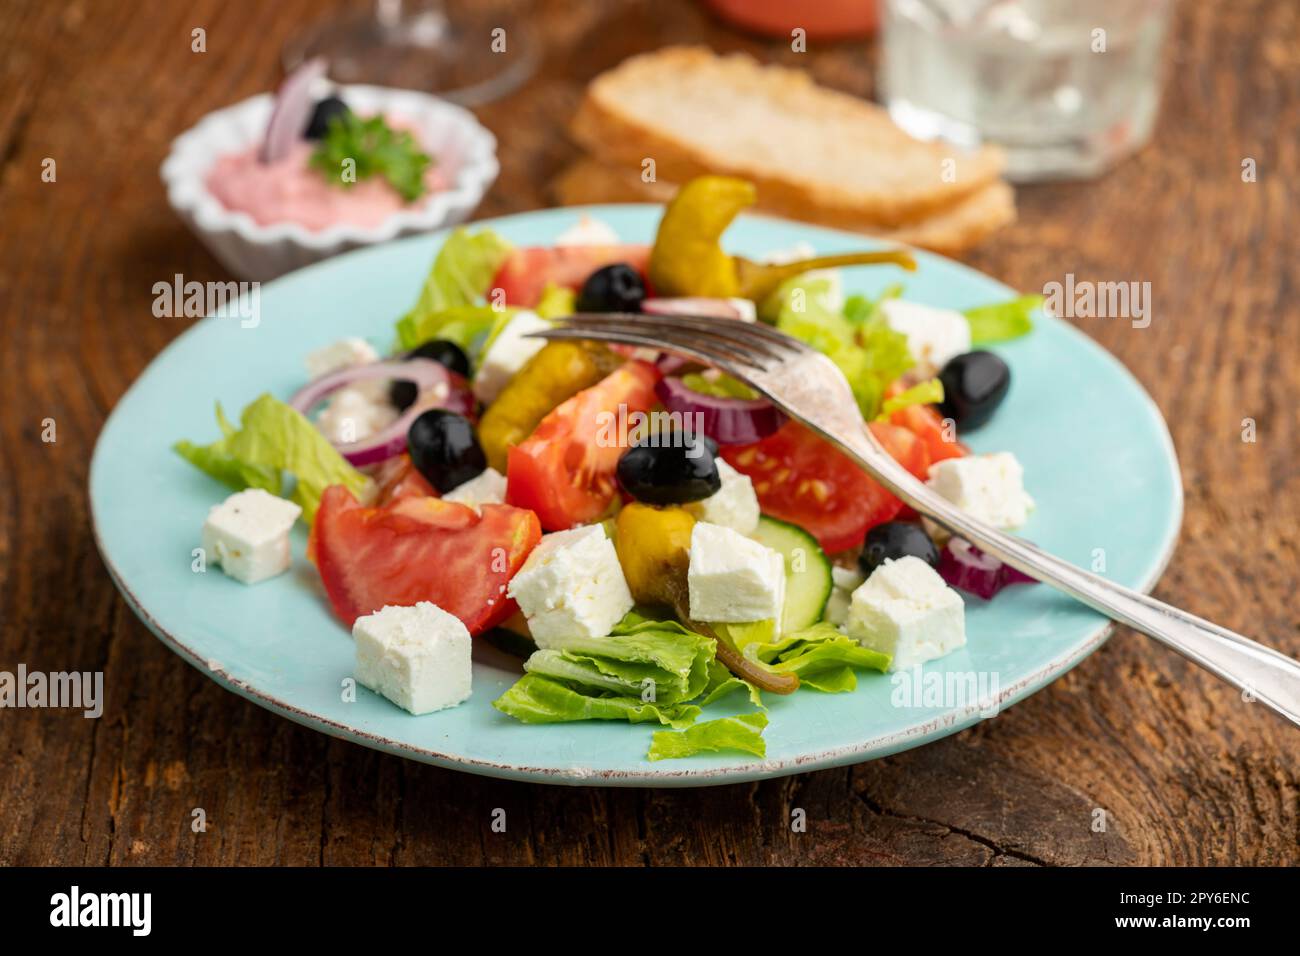 geek salad with feta cheese Stock Photo